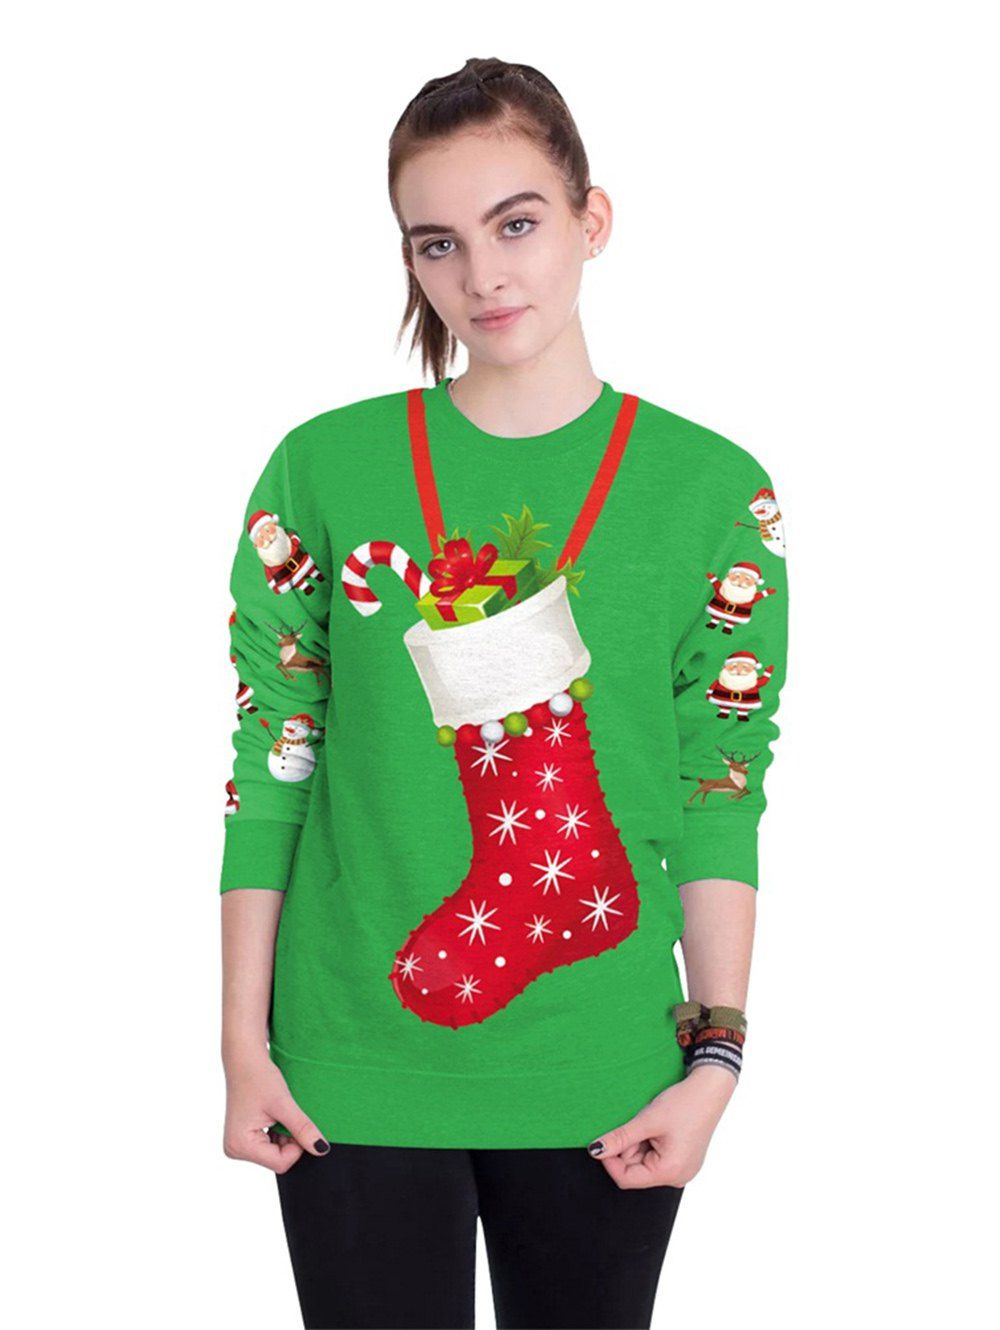 New style christmas sweatshirts uni funny print ugly green 1000x1330 Funny ugly dress